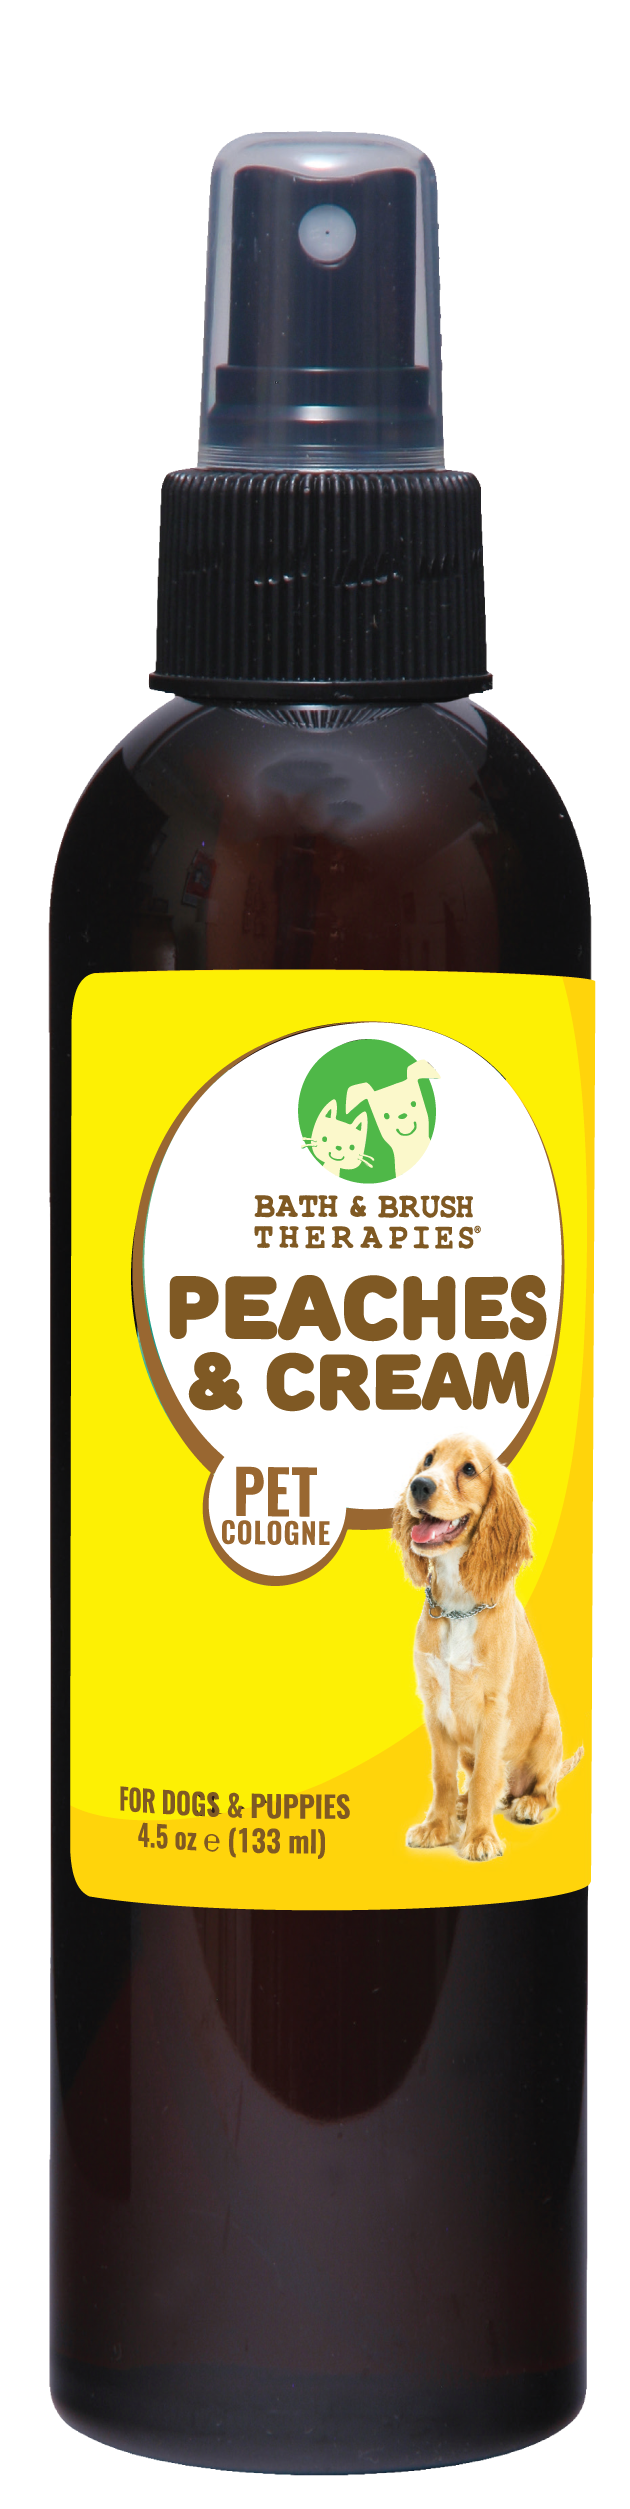 Peaches & Cream Pet Cologne | Bath & Brush Therapies®